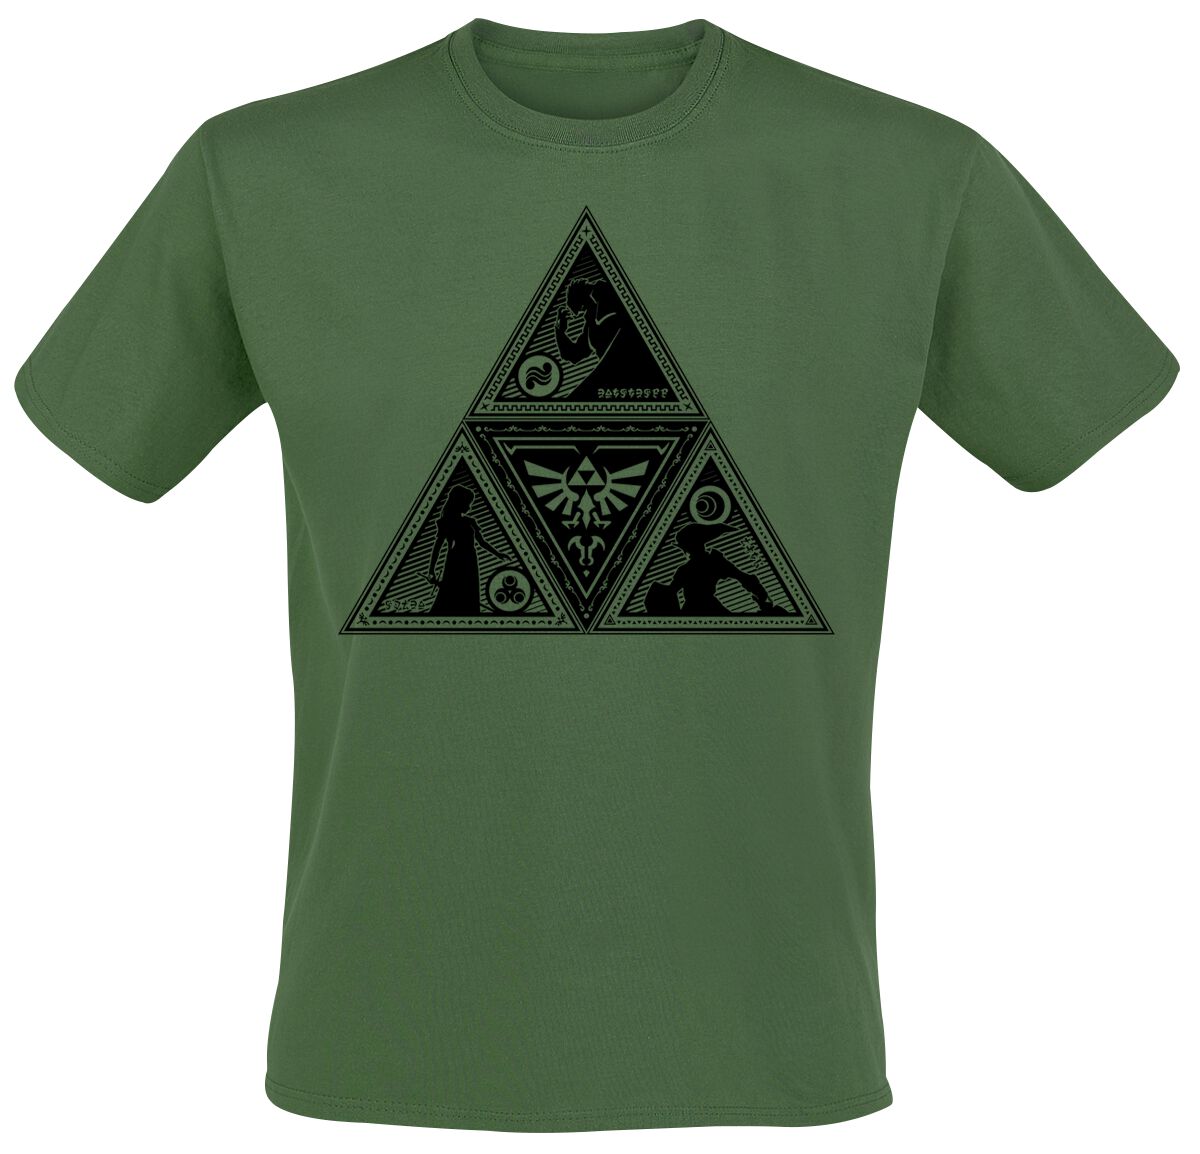 The Legend Of Zelda Triforce T-Shirt dunkelgrün in S